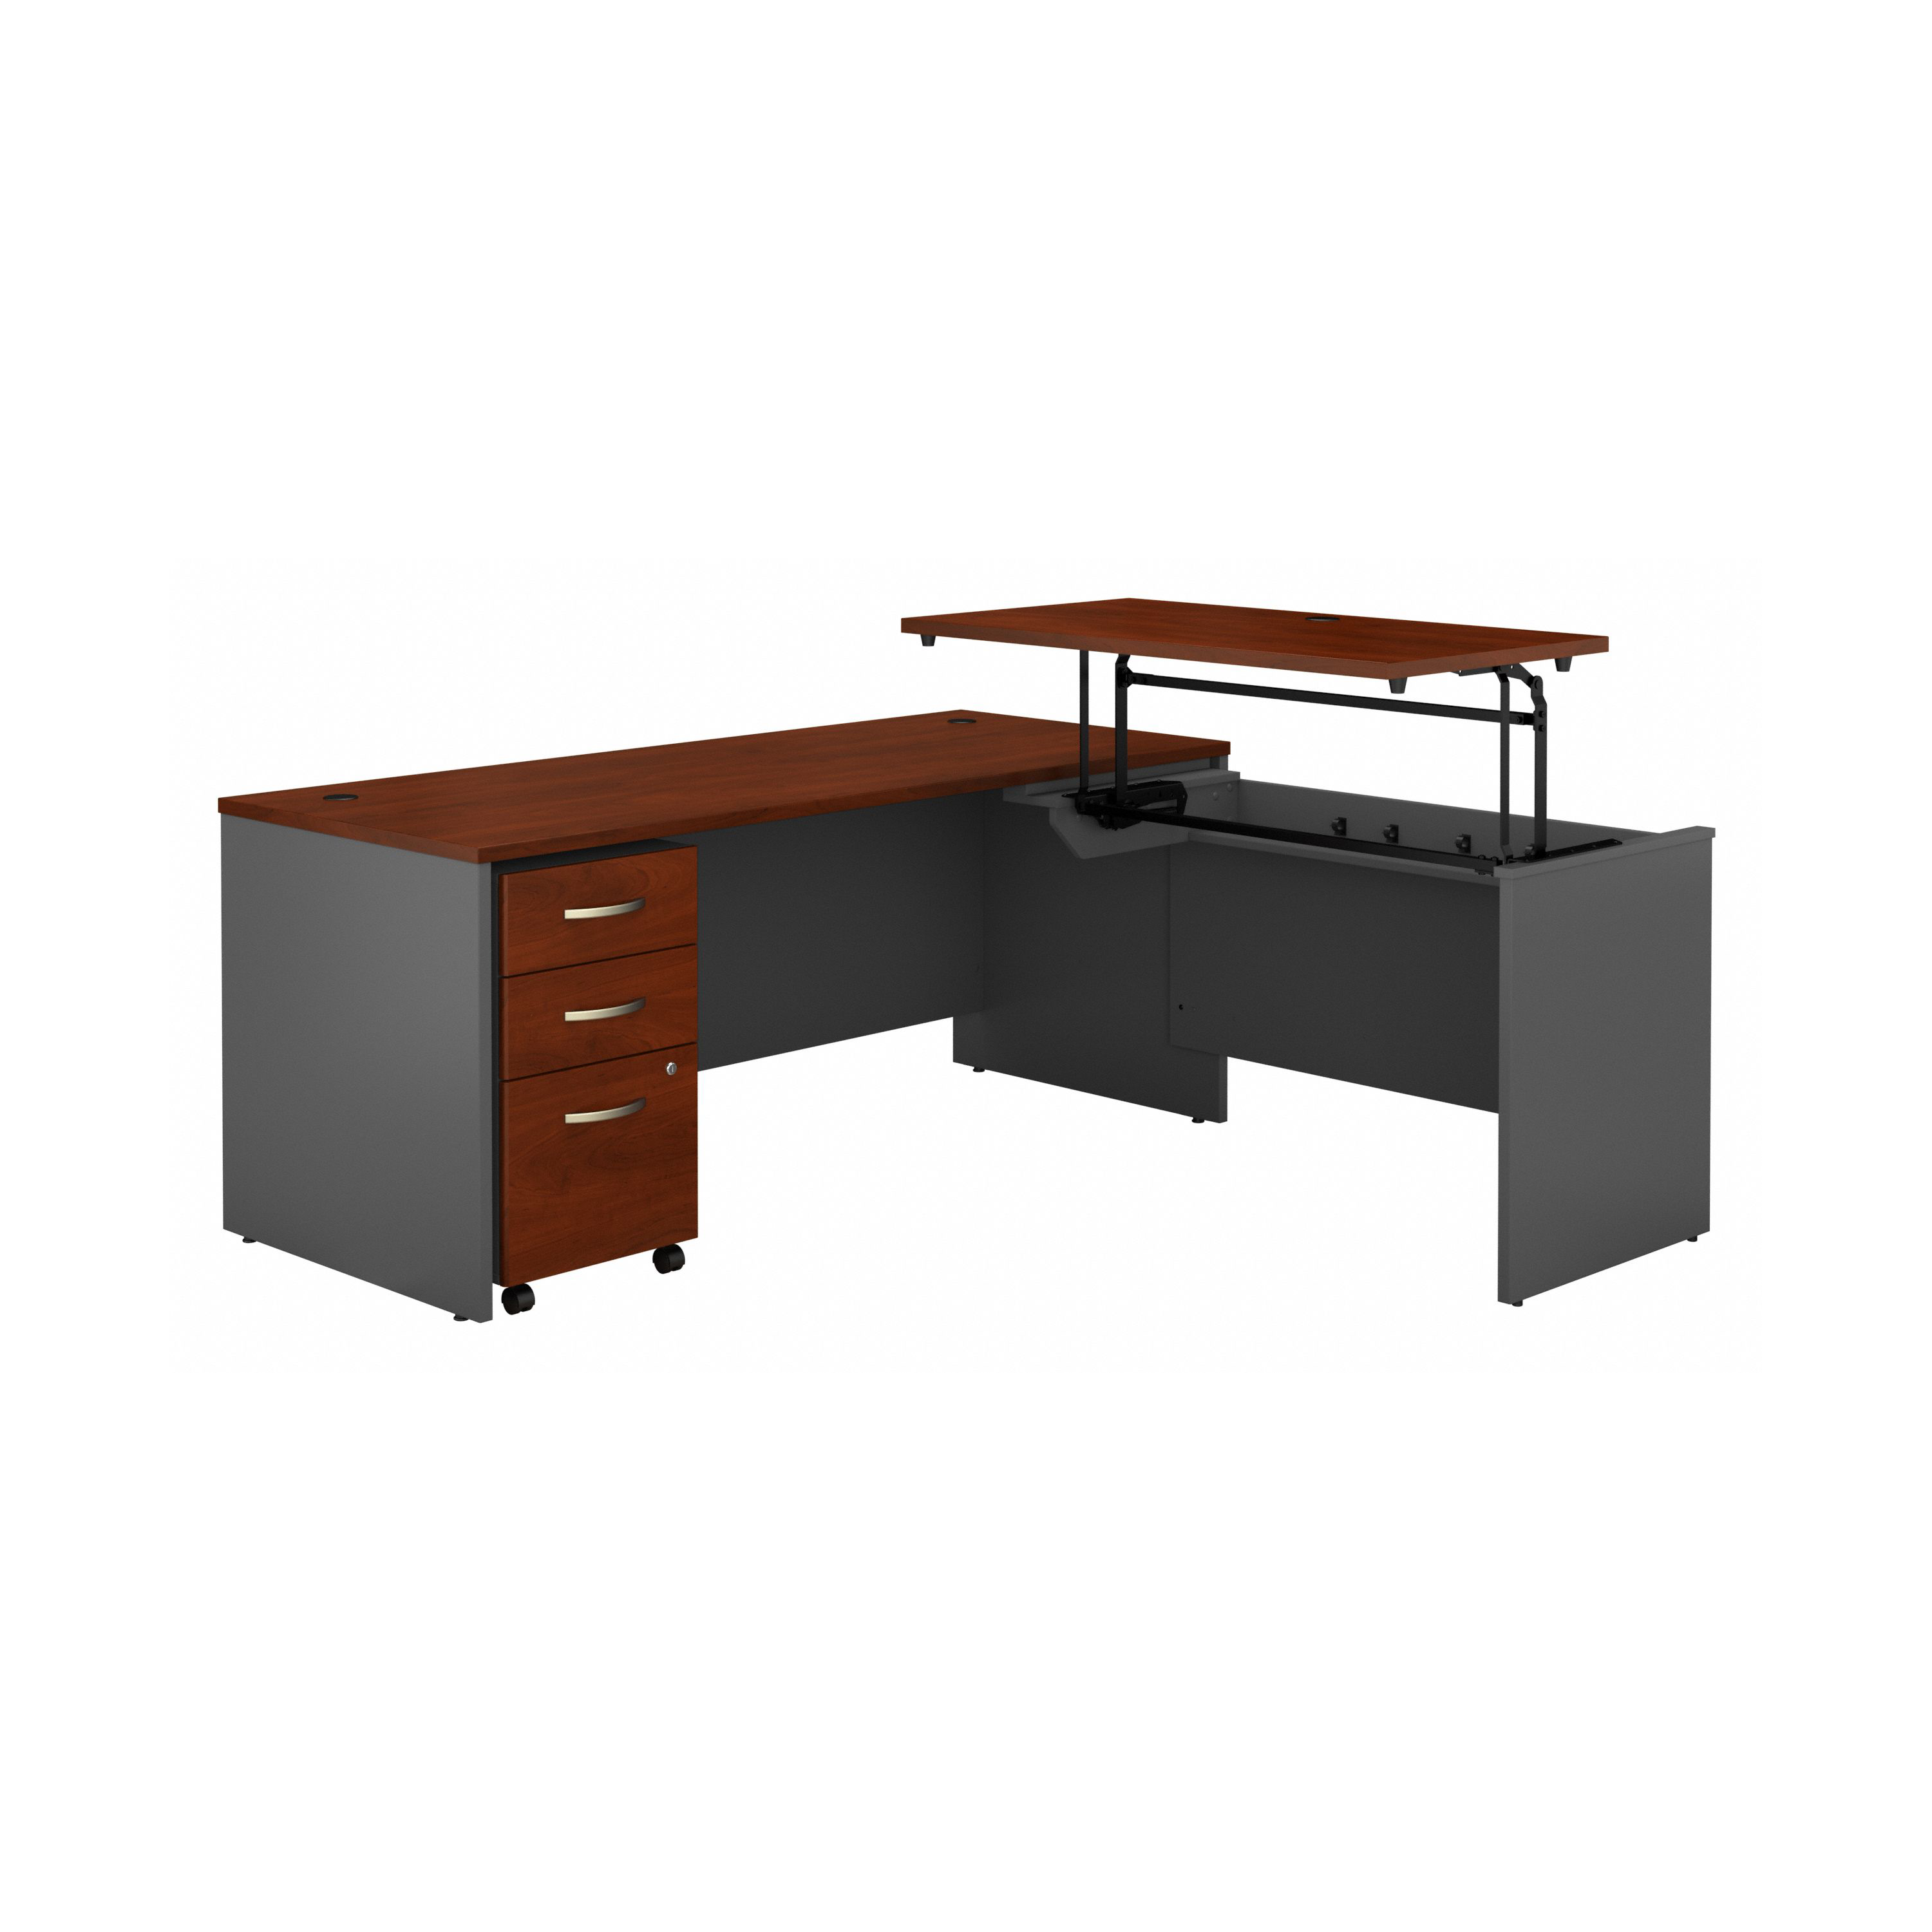 Shop Bush Business Furniture Series C 72W x 30D 3 Position Sit to Stand L Shaped Desk with Mobile File Cabinet 02 SRC125HCSU #color_hansen cherry/graphite gray